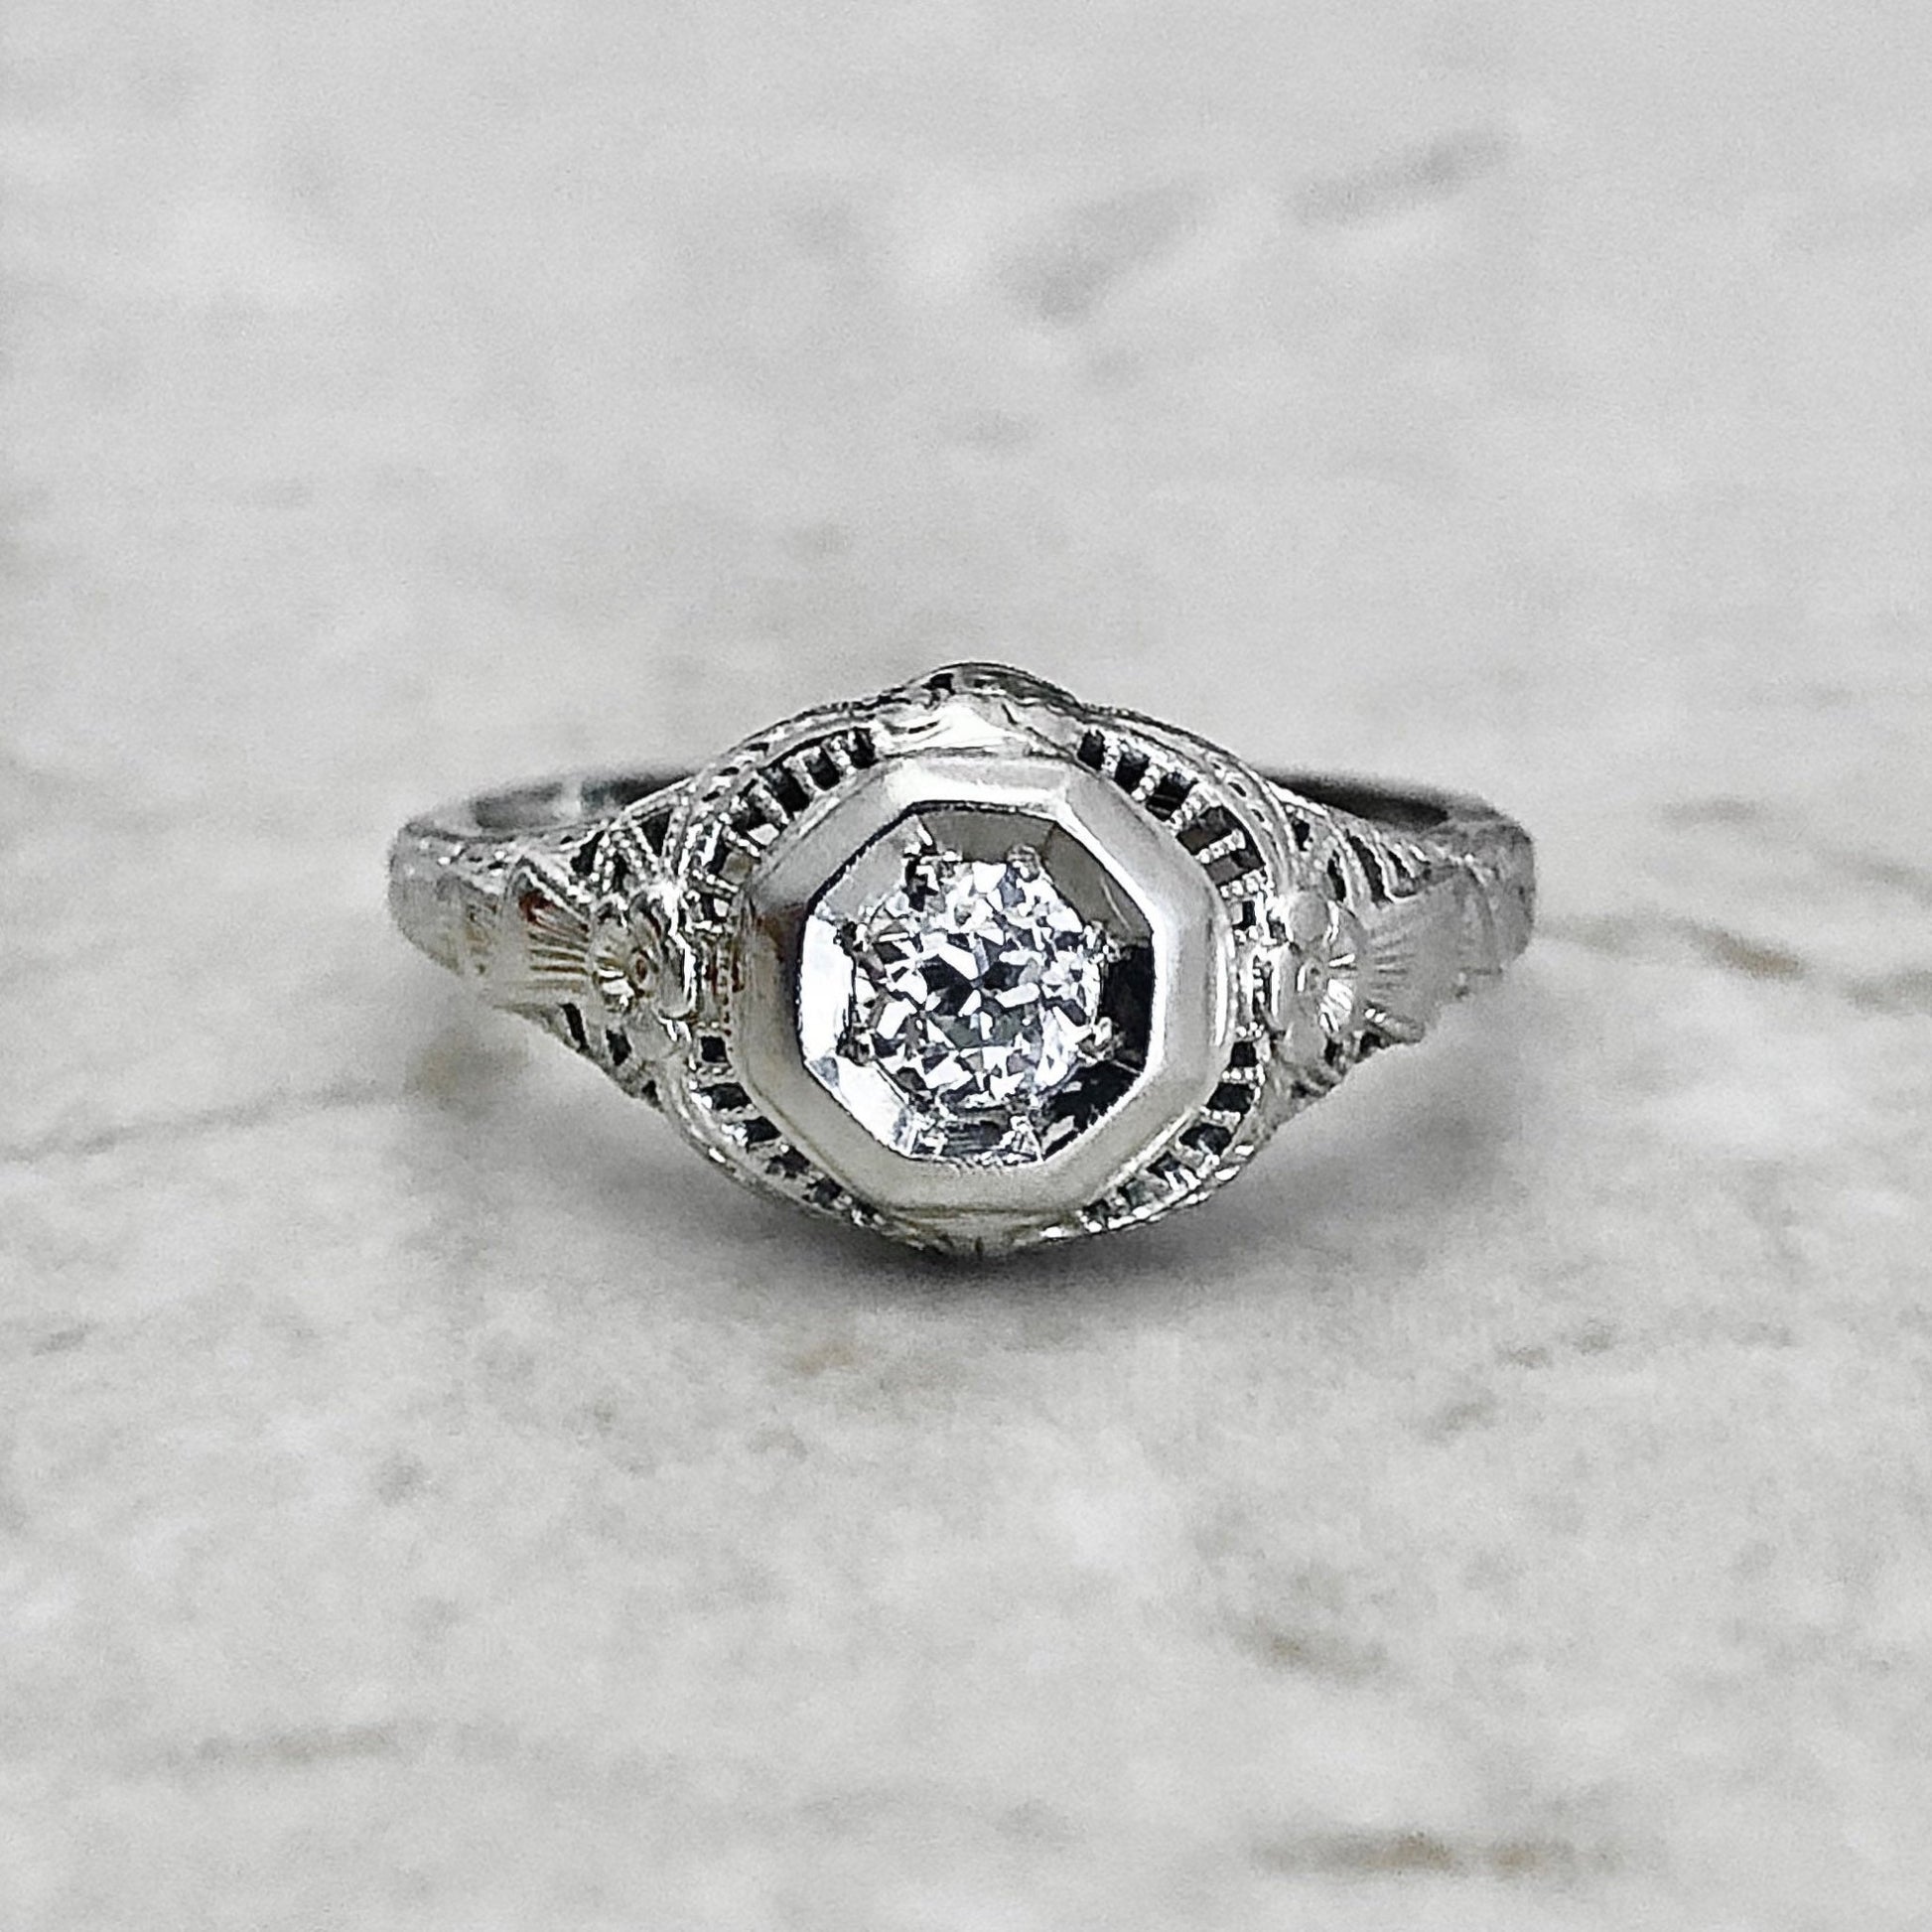 Antique Art Deco Diamond Engagement Ring -  18K White Gold Art Deco Solitaire Ring - Art Deco Ring - Filigree Ring - Diamond Wedding Ring